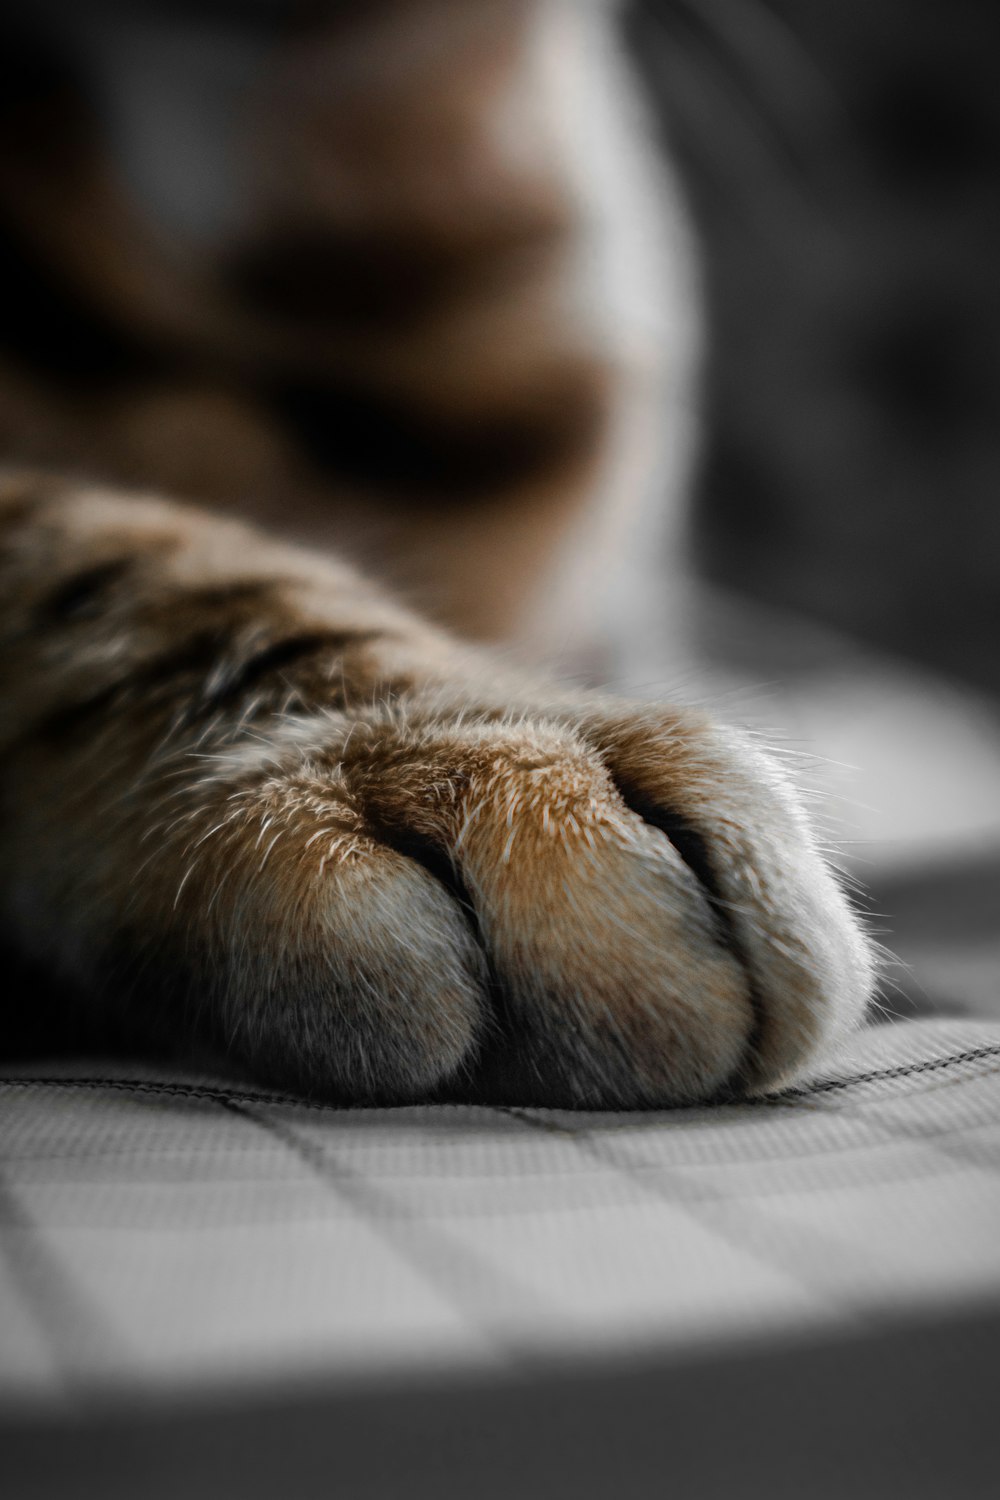 Braune Tabby-Katze liegt auf weiß-grau gestreiftem Textil